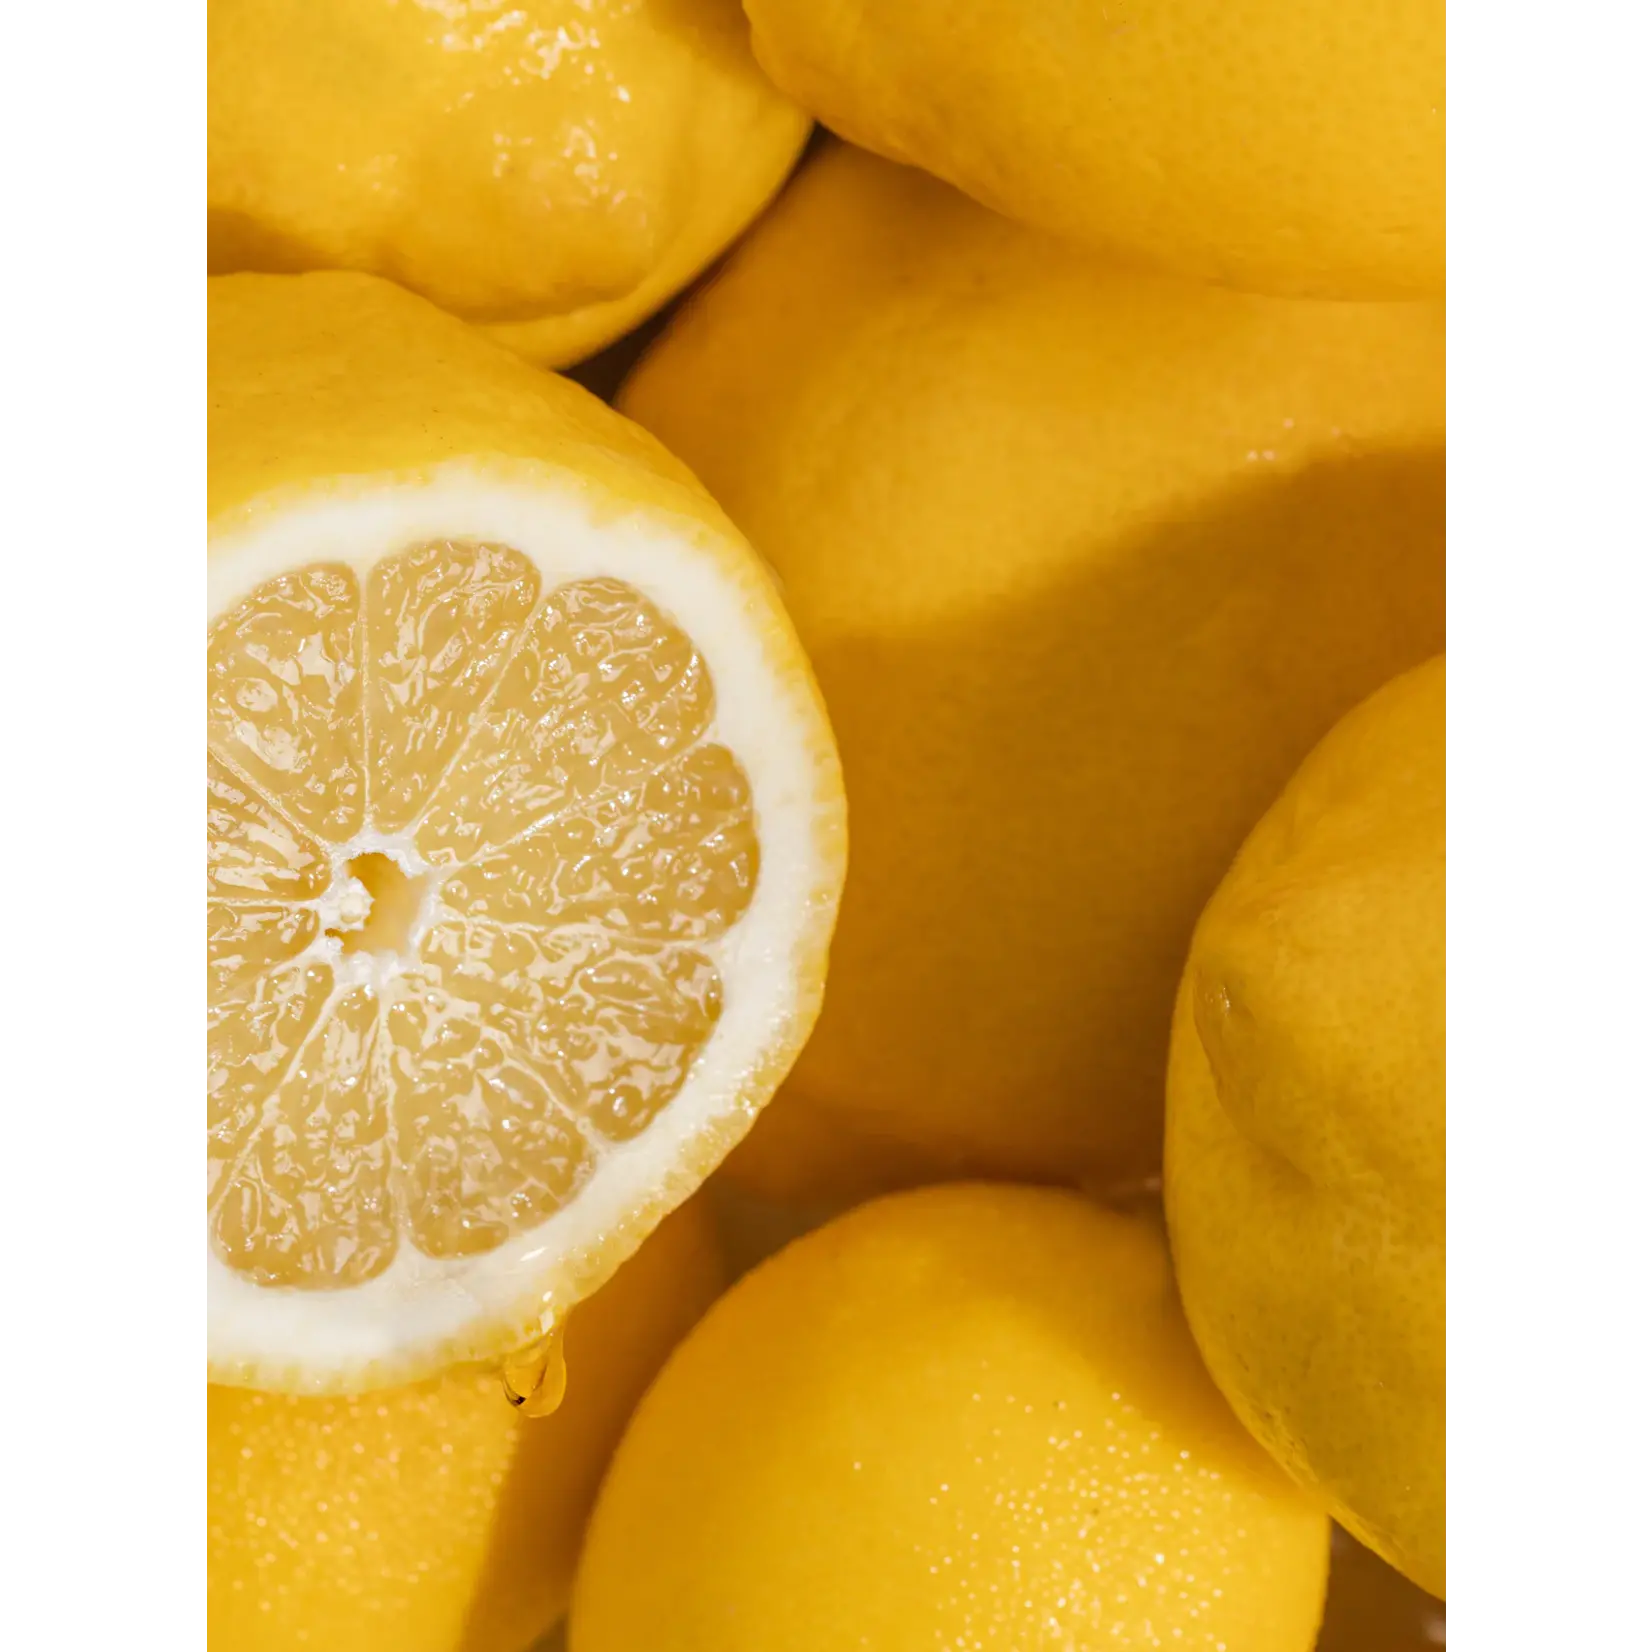 Thymes Lemon Leaf Pura Diffuser Refill